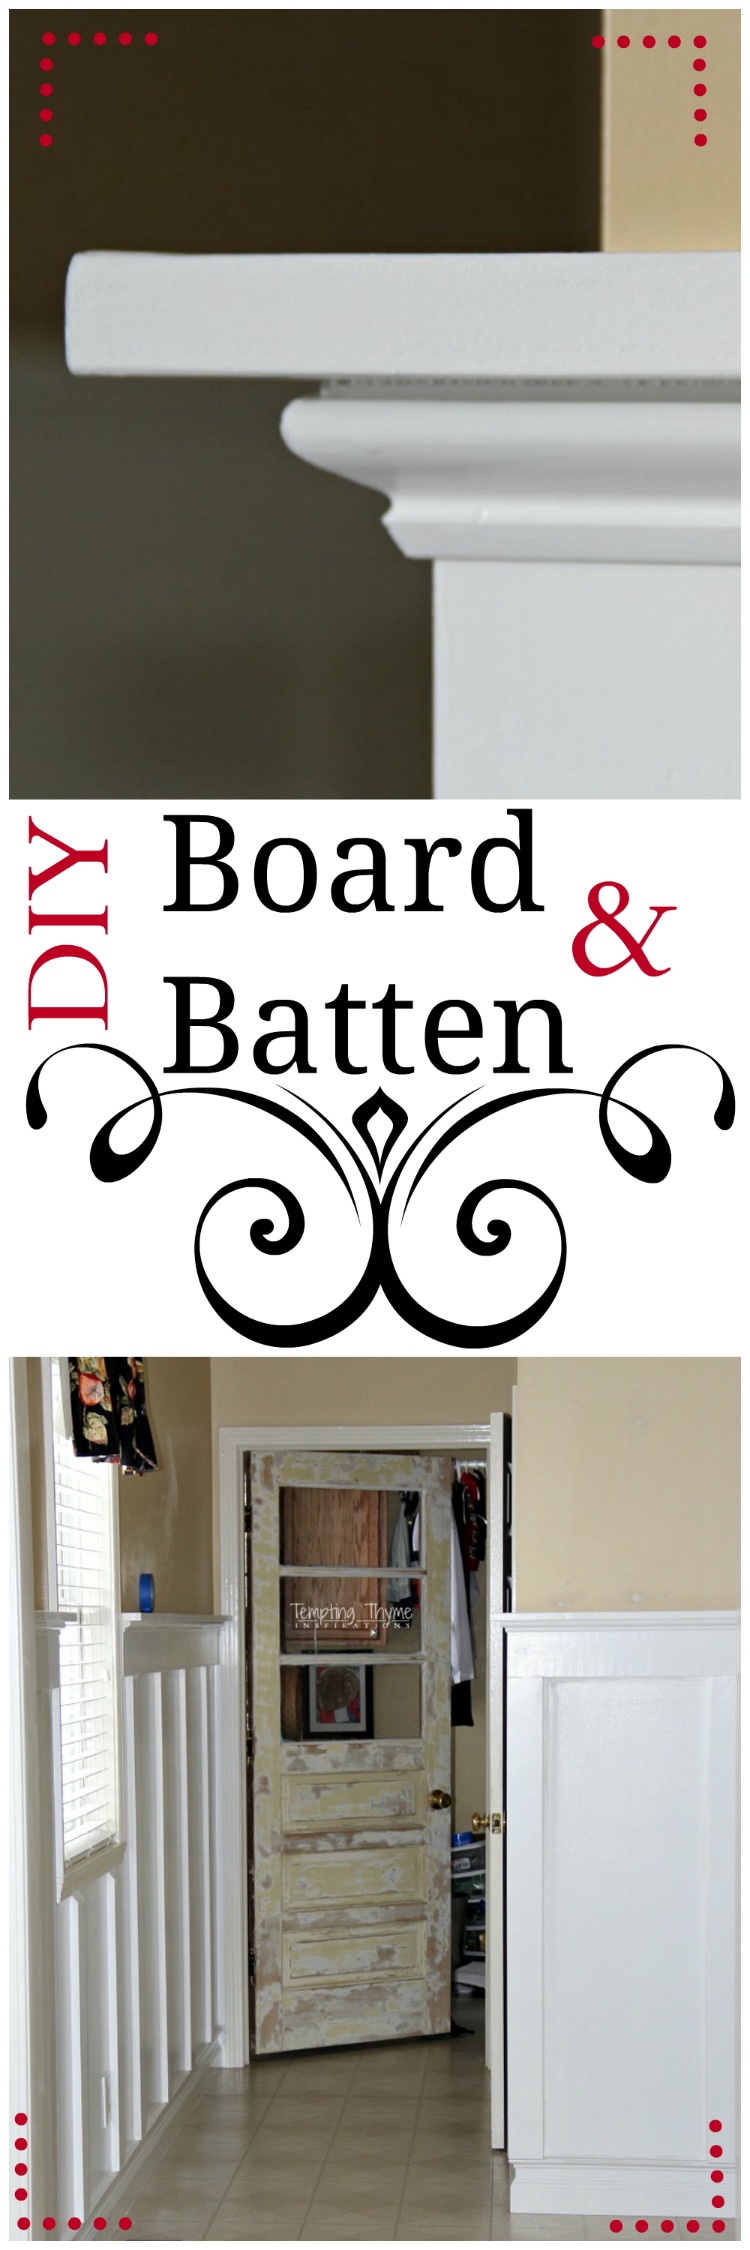 DIY Board and Batten